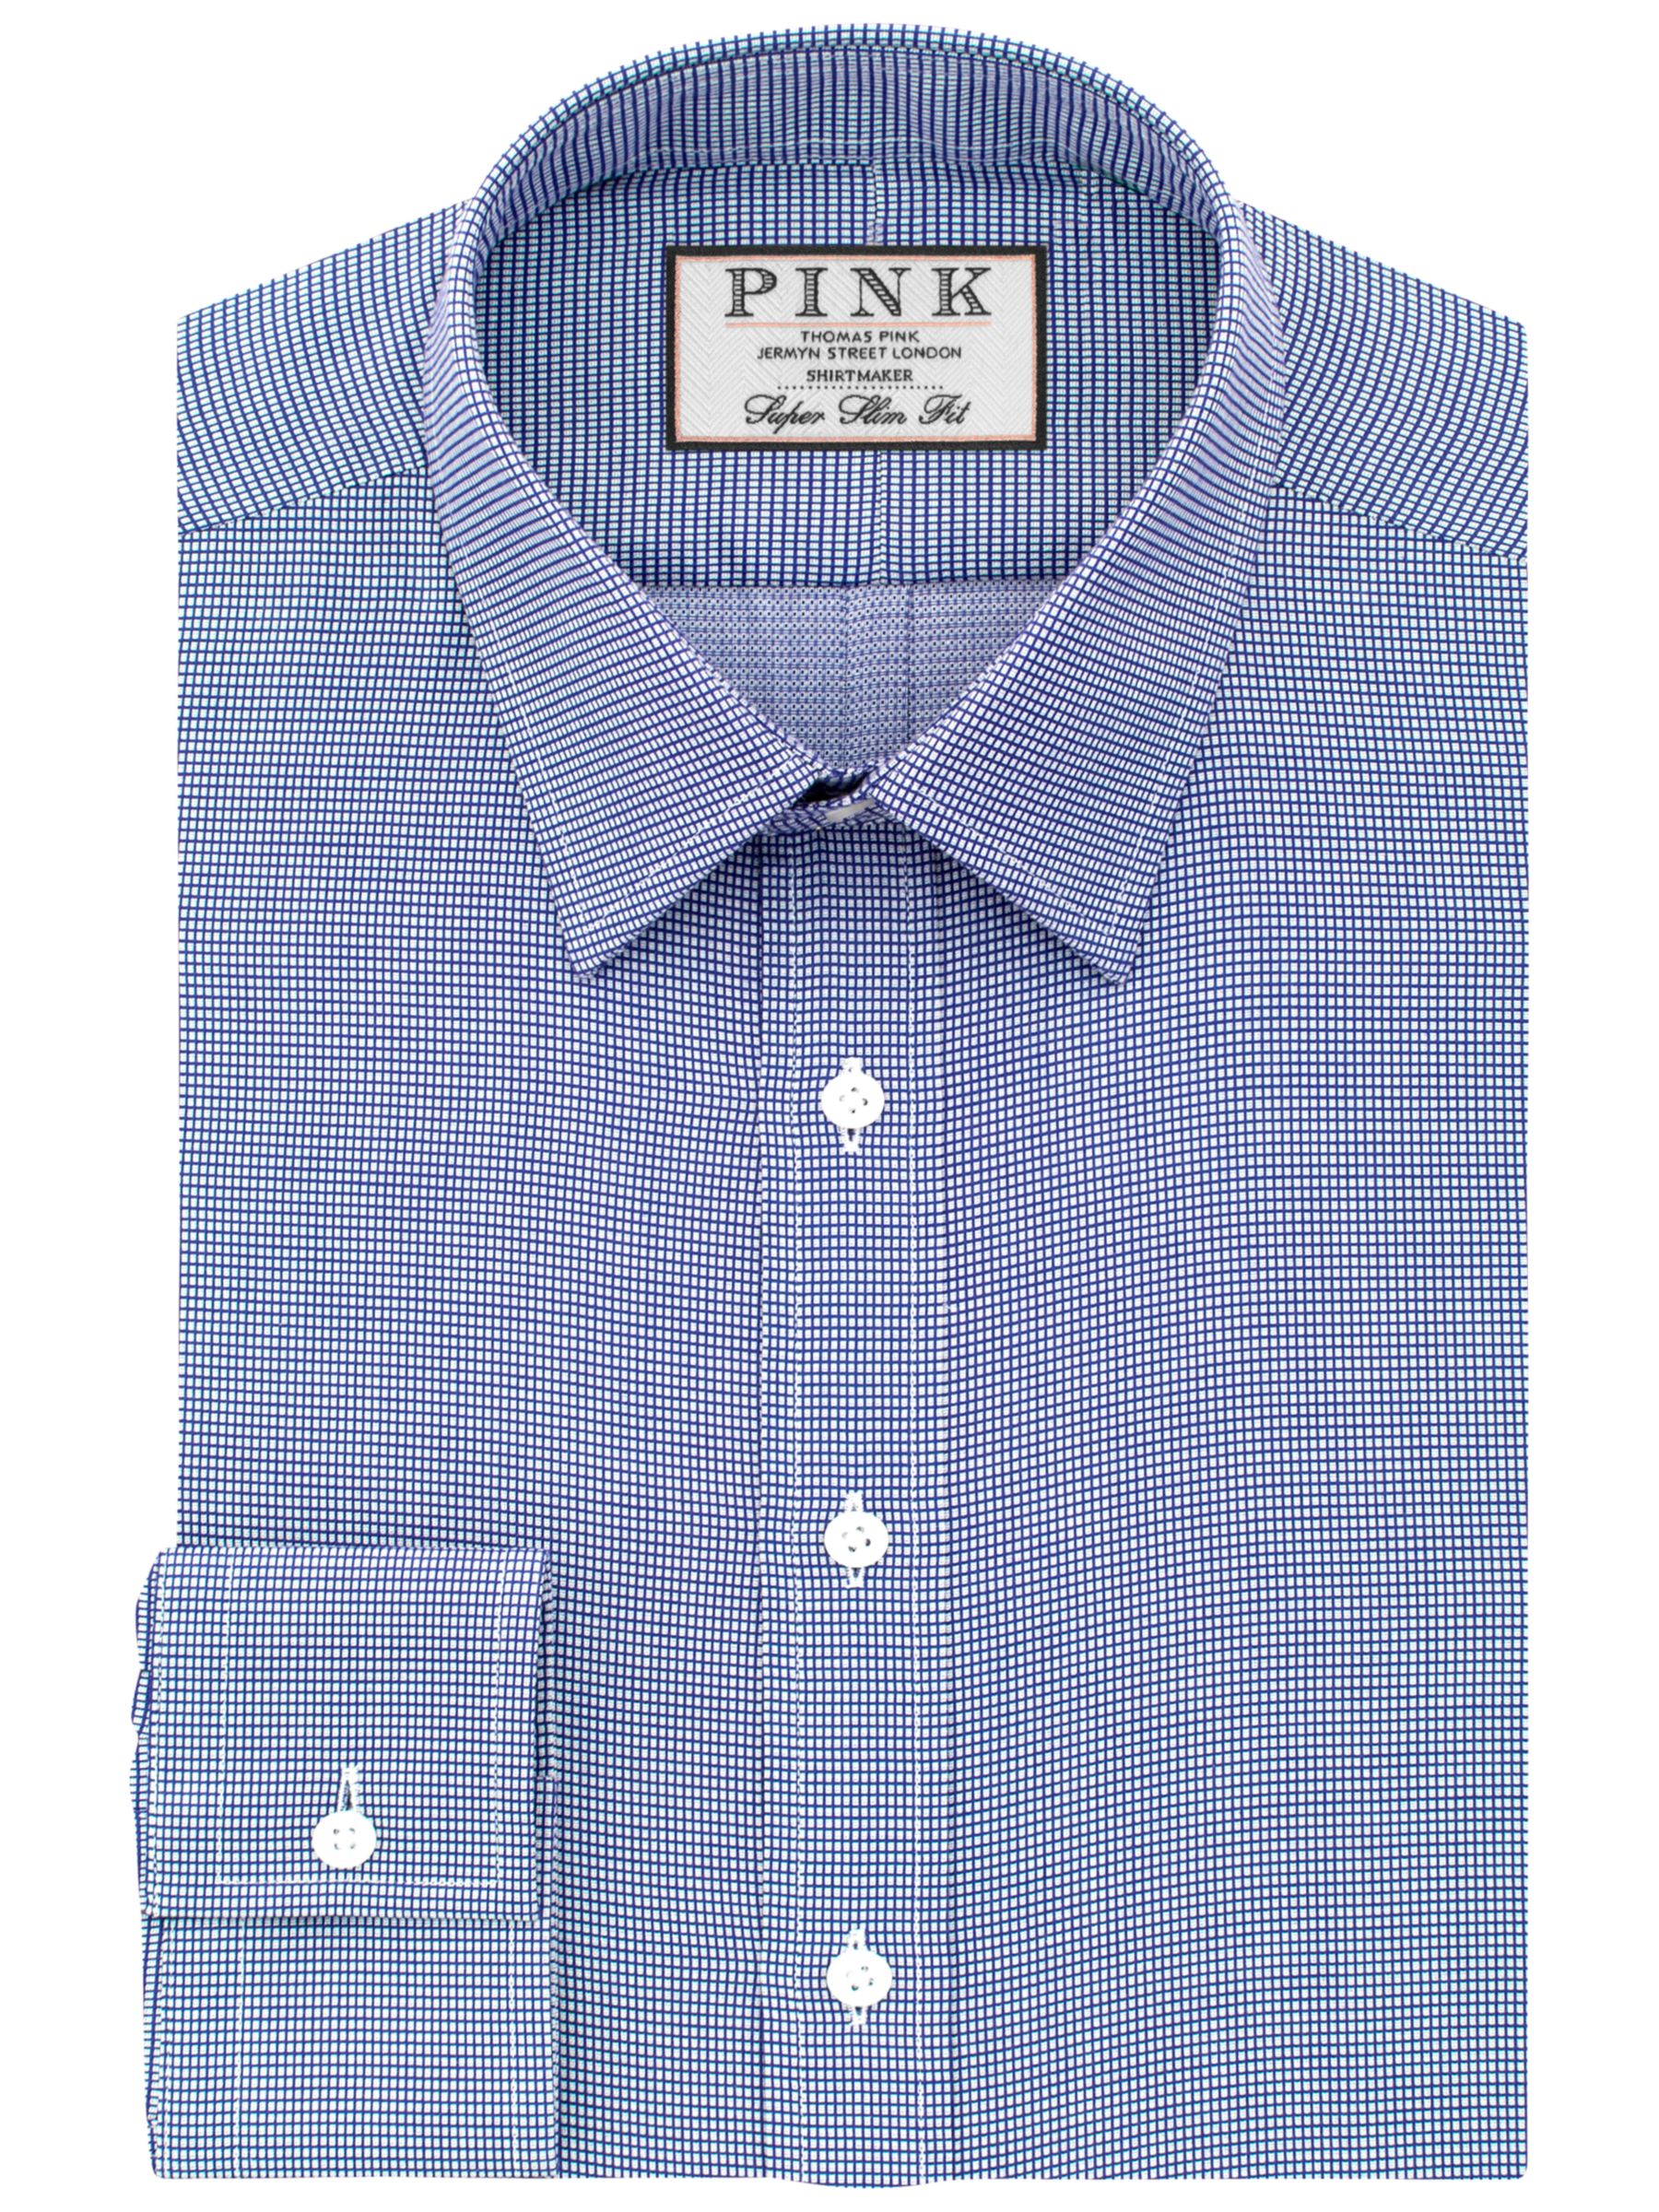 Thomas Pink Hartley Textured Super Slim Fit Shirt, Blue/White, 16.5